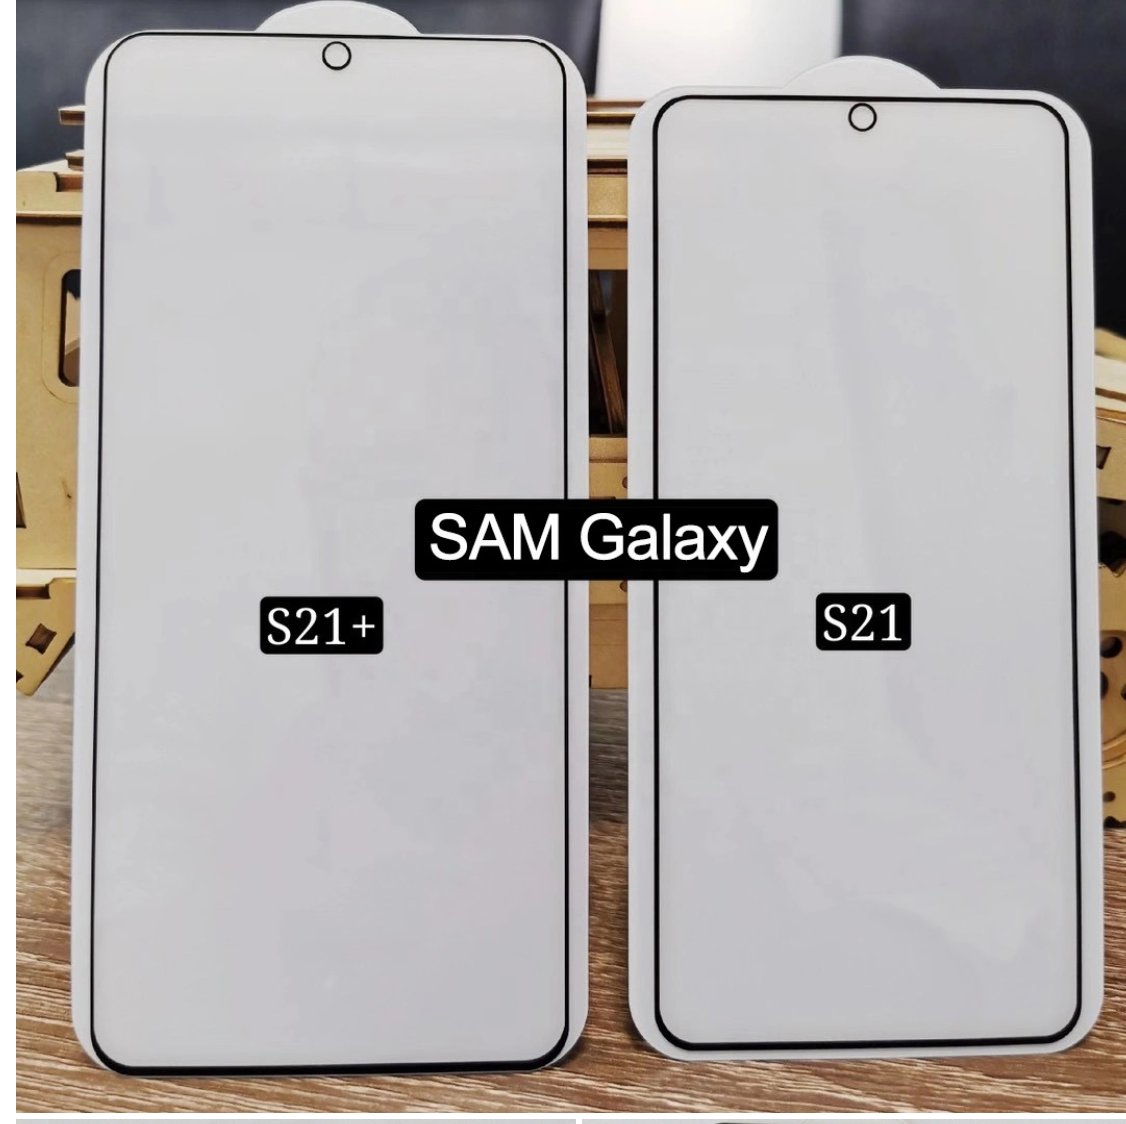 Samsung galaxy s21 и s21 сравнение. Samsung Galaxy s21+. Samsung Galaxy s21 Plus Размеры. Samsung s21 габариты. Samsung s21 и s21+.